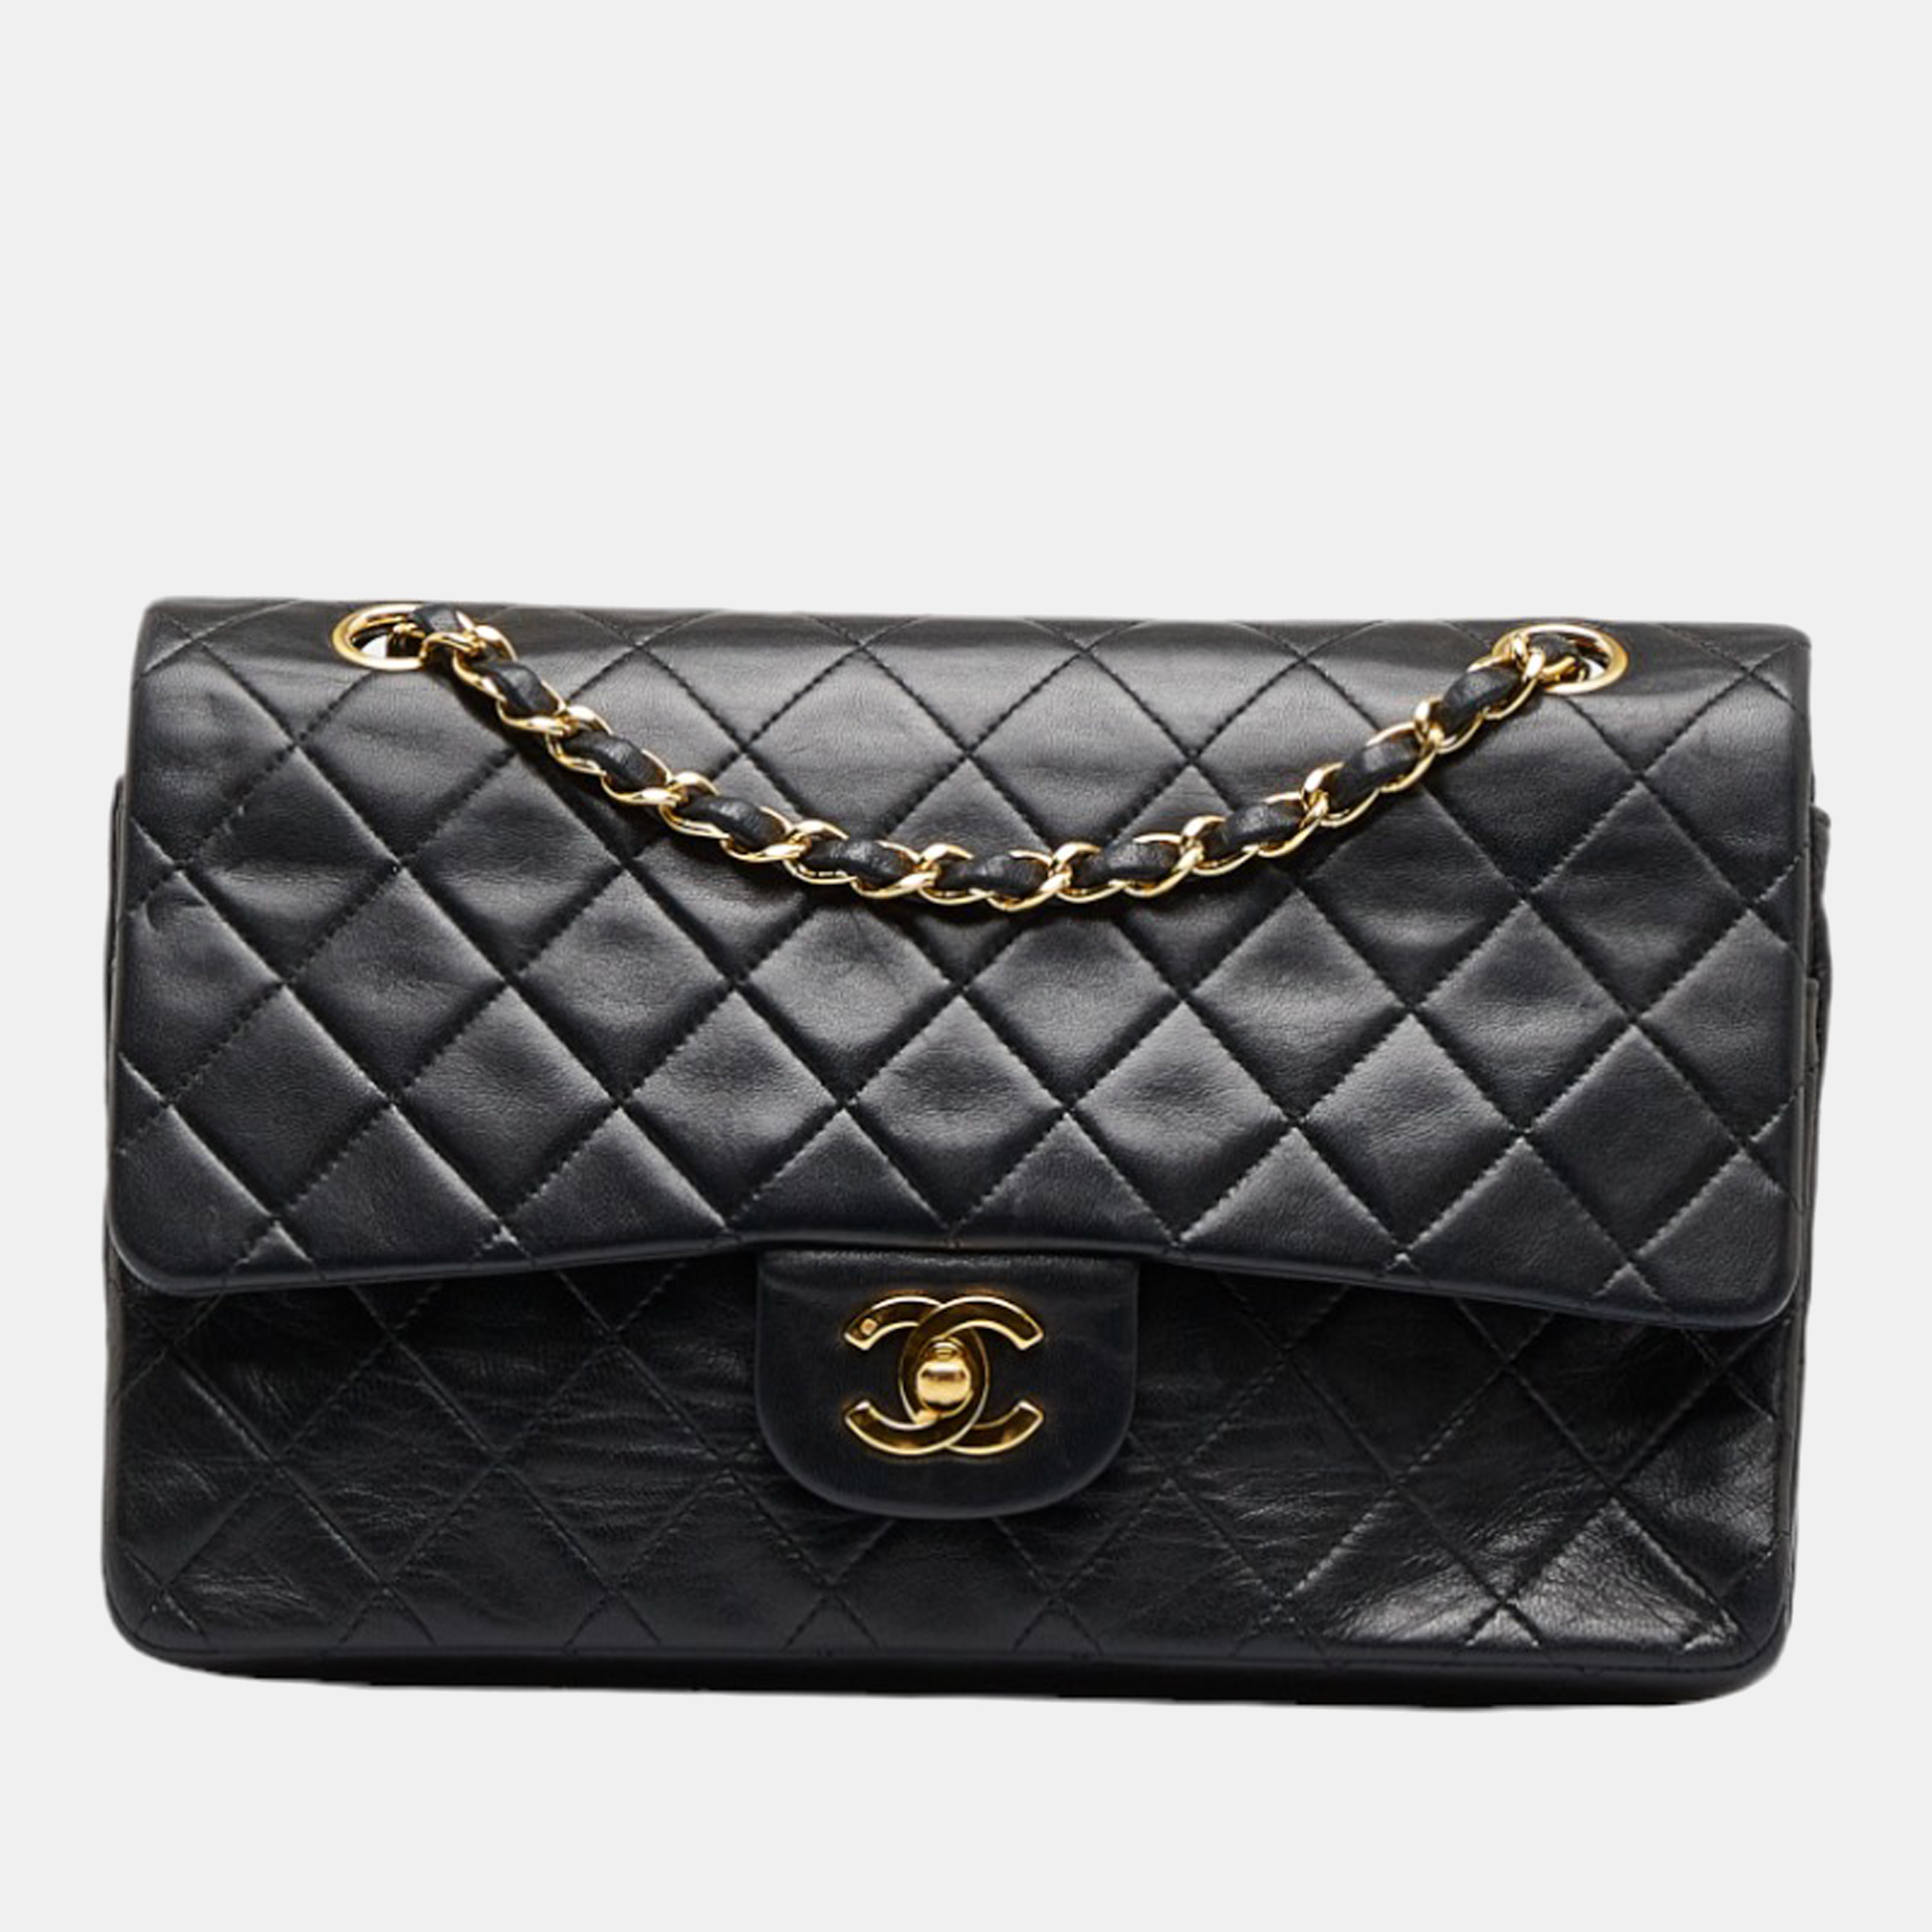 Chanel black leather medium classic double flap shoulder bag